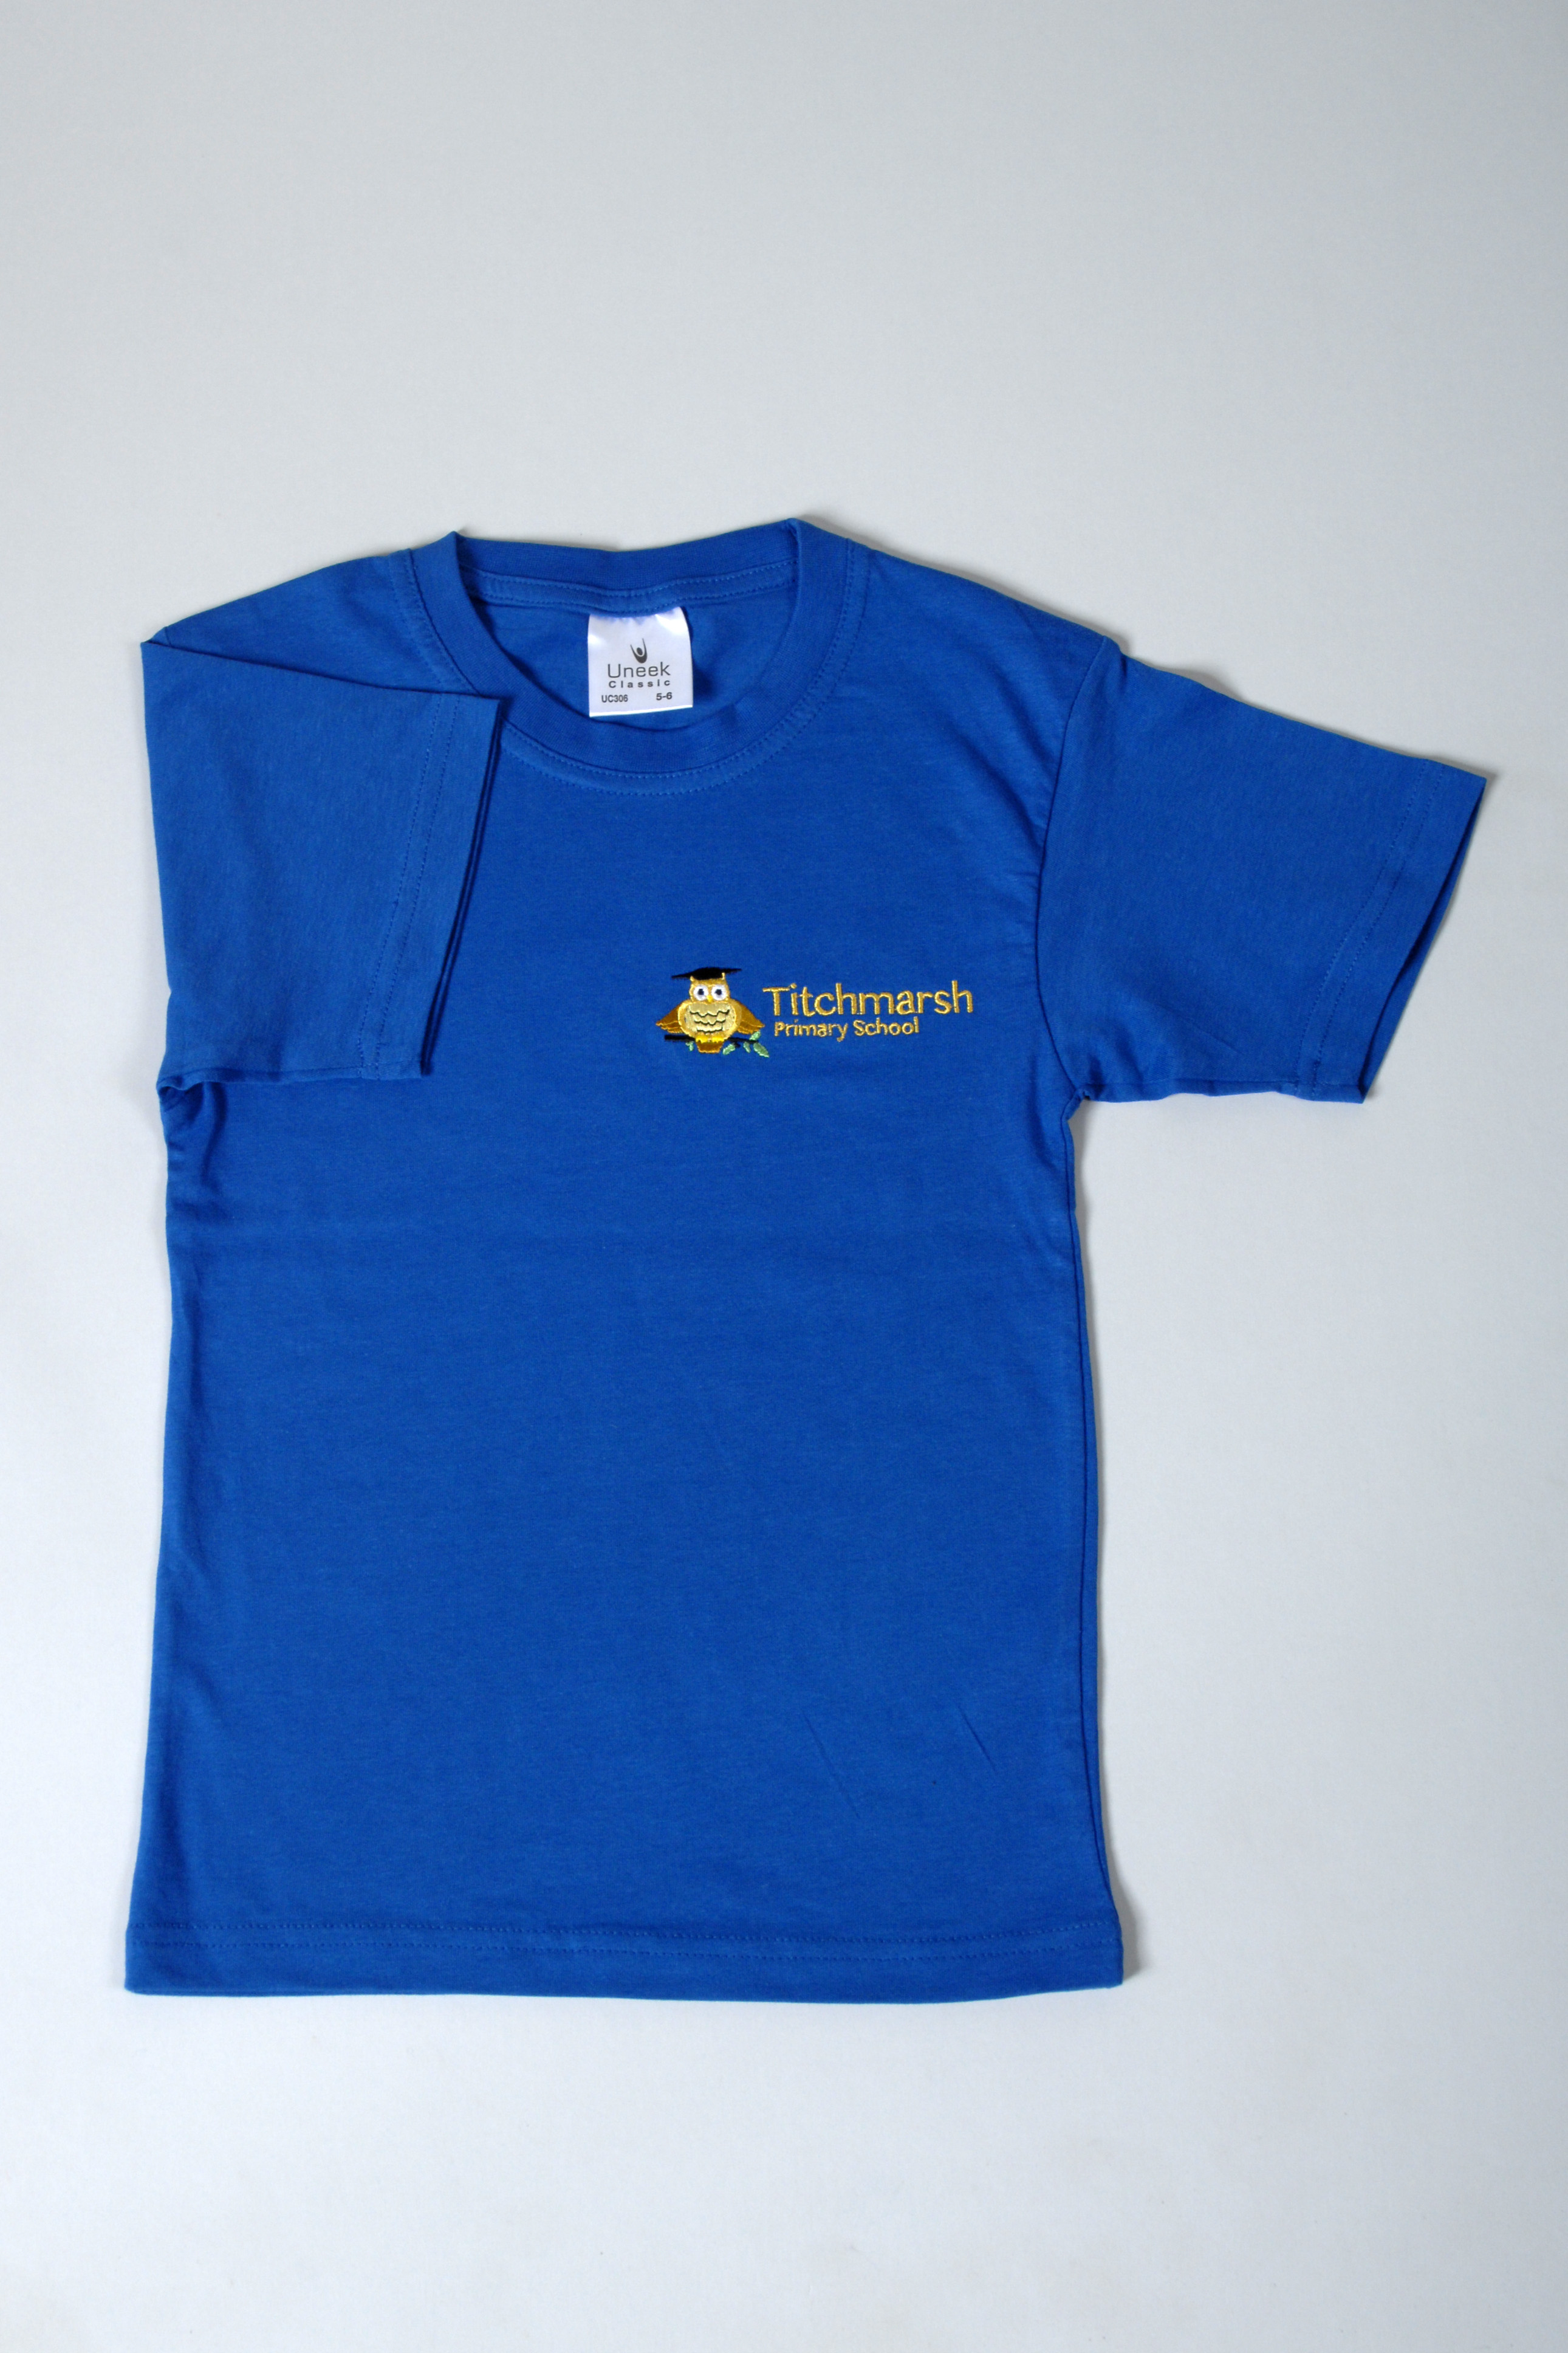 Royal Blue T Shirt with School Logo - Age 11-12